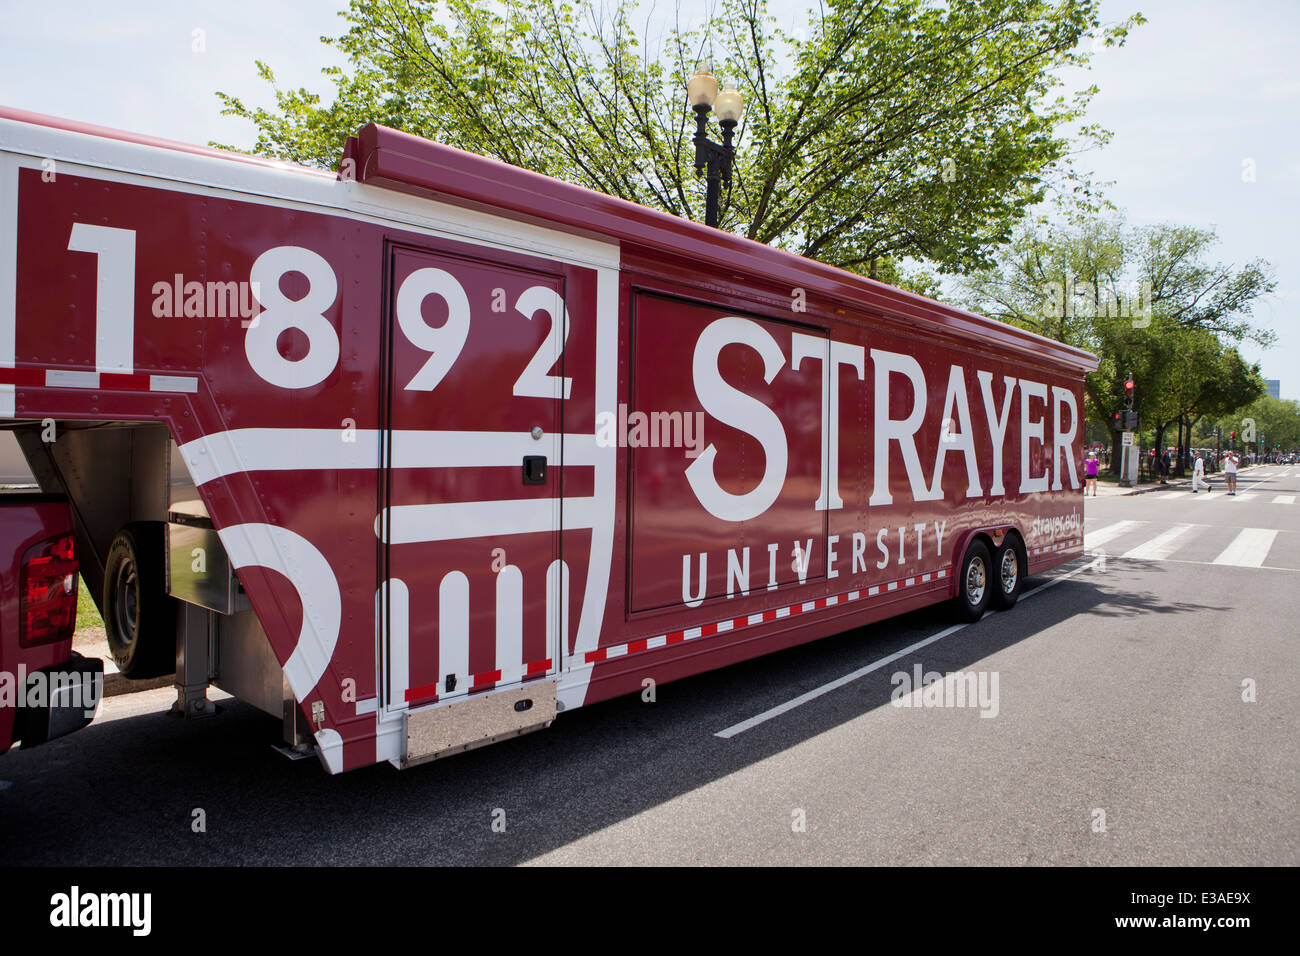 Strayer University ad on trailer - USA Stock Photo